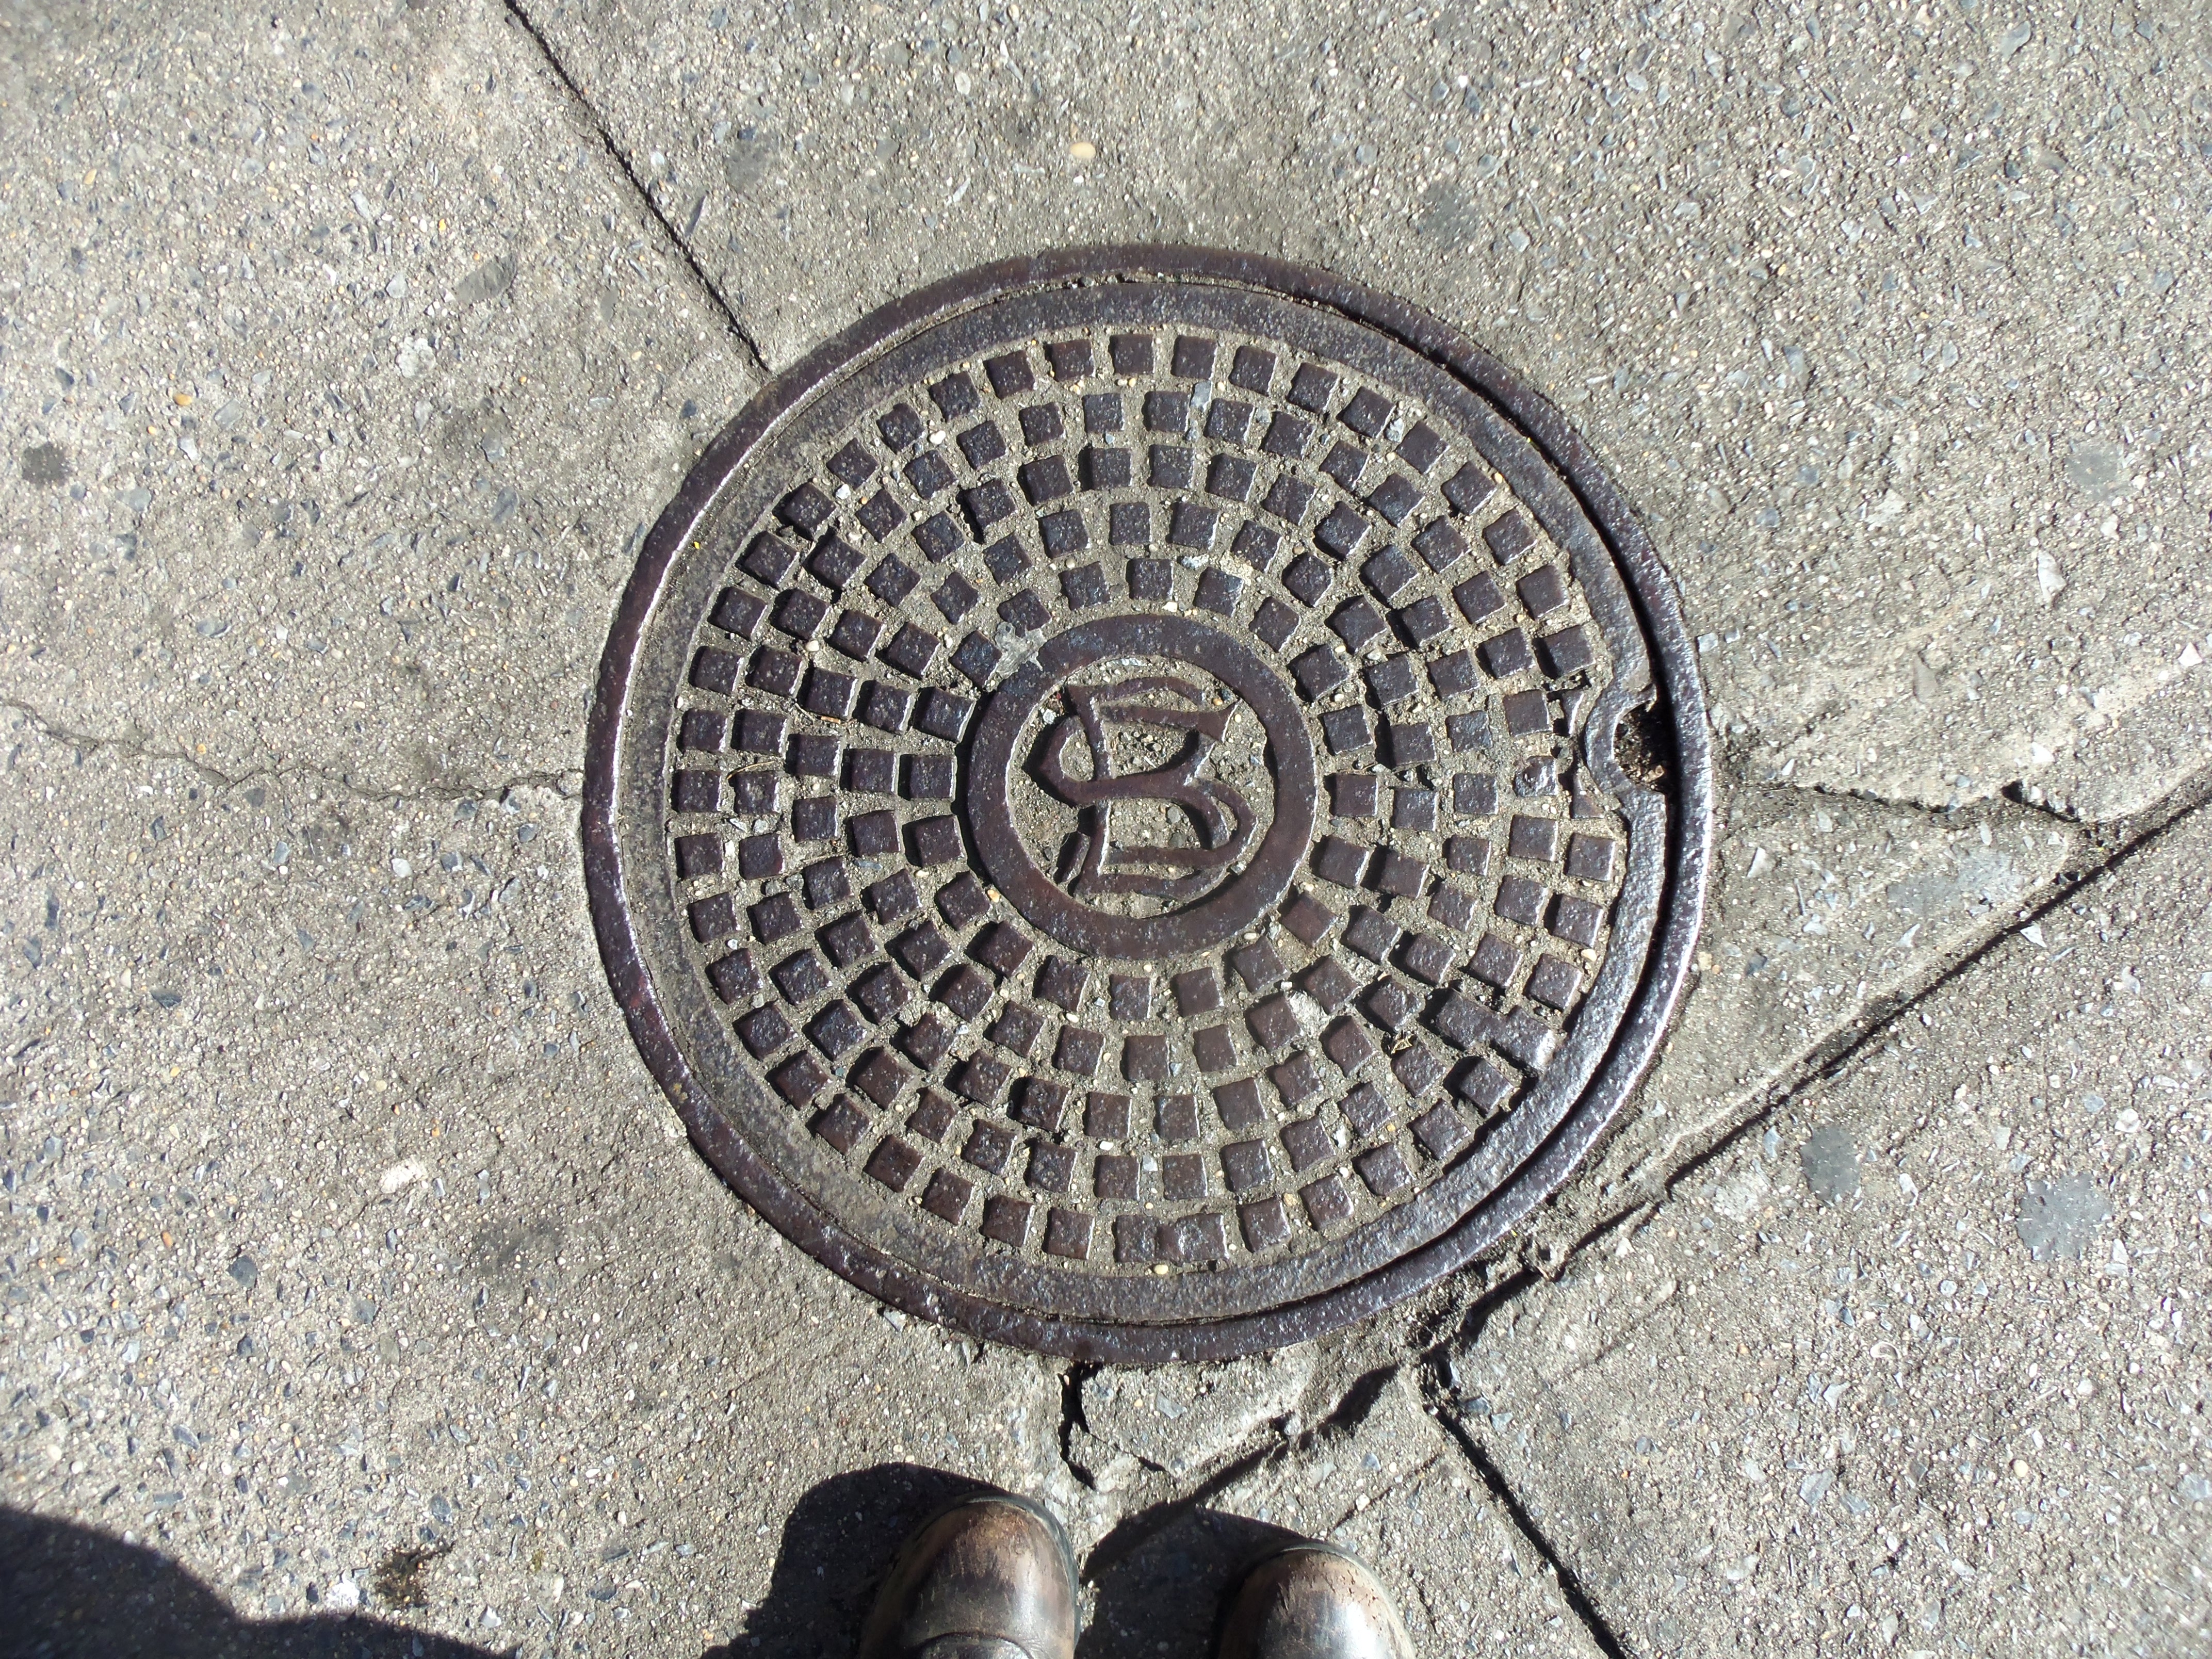 Bureau of Sewers?